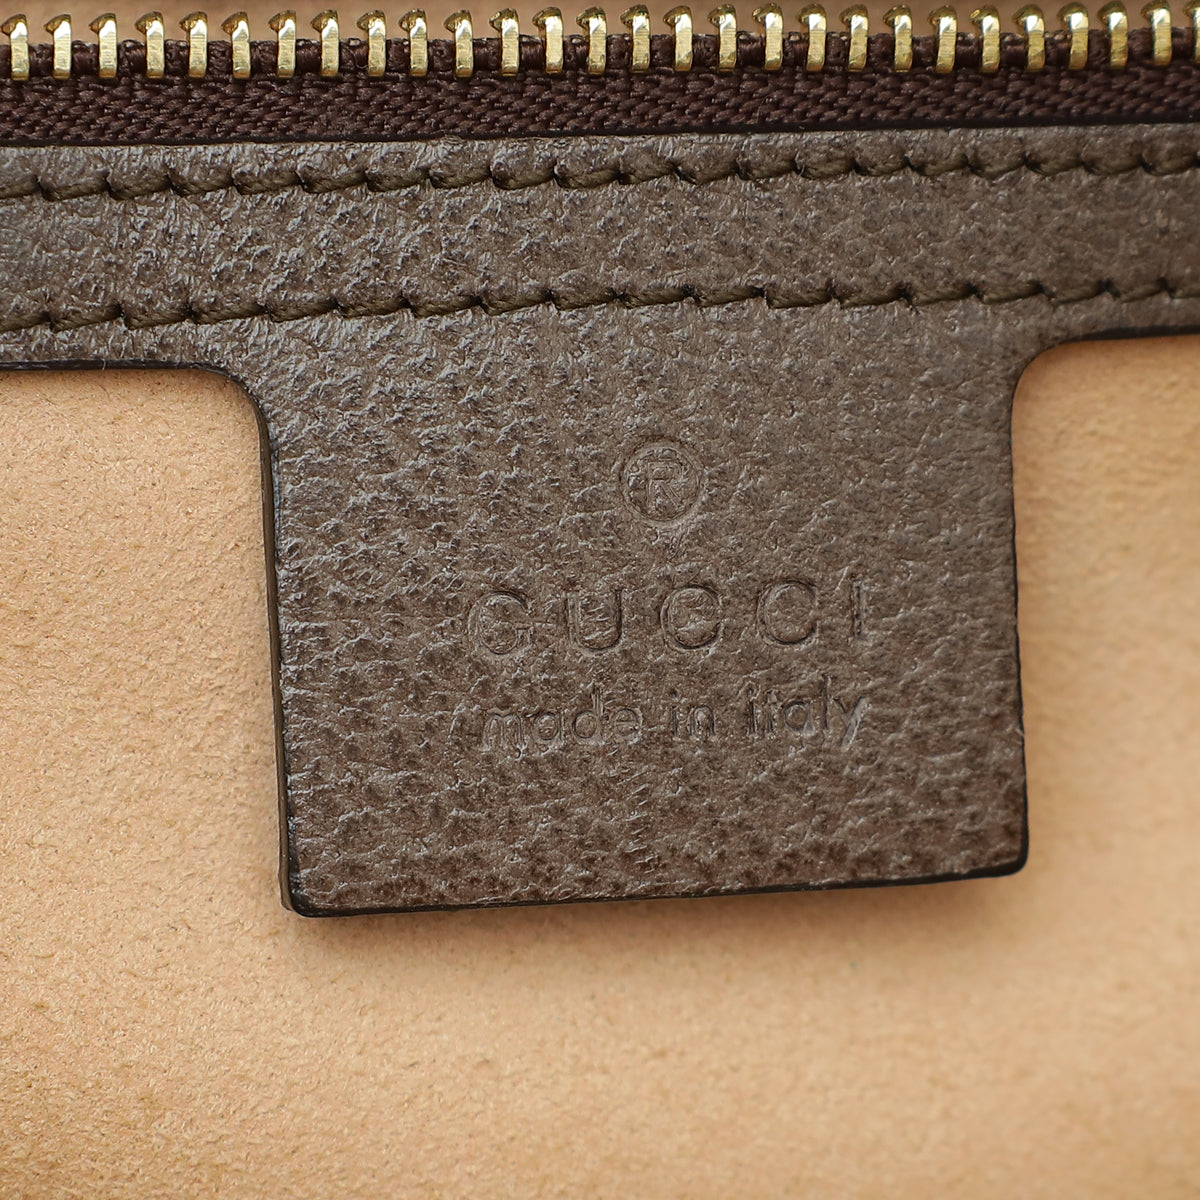 Gucci Bicolor GG Supreme Small Ophidia Top Handle Bag